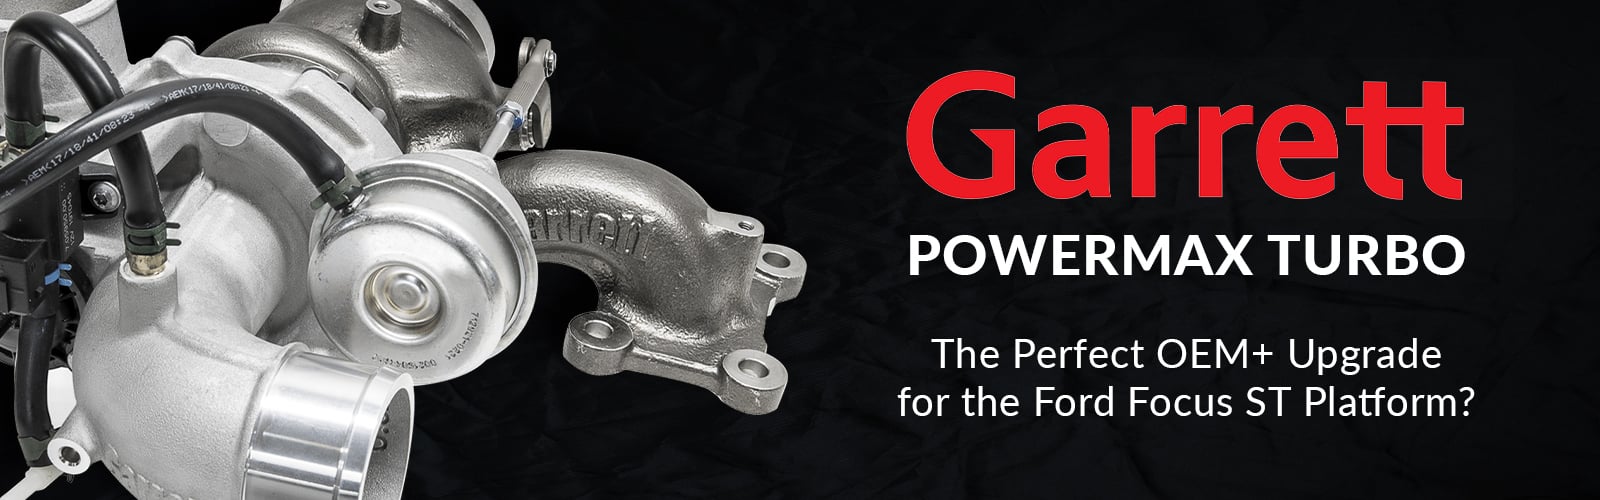 The Garrett PowerMax: A Perfect OEM+ Turbo Upgrade for the Focus ST?